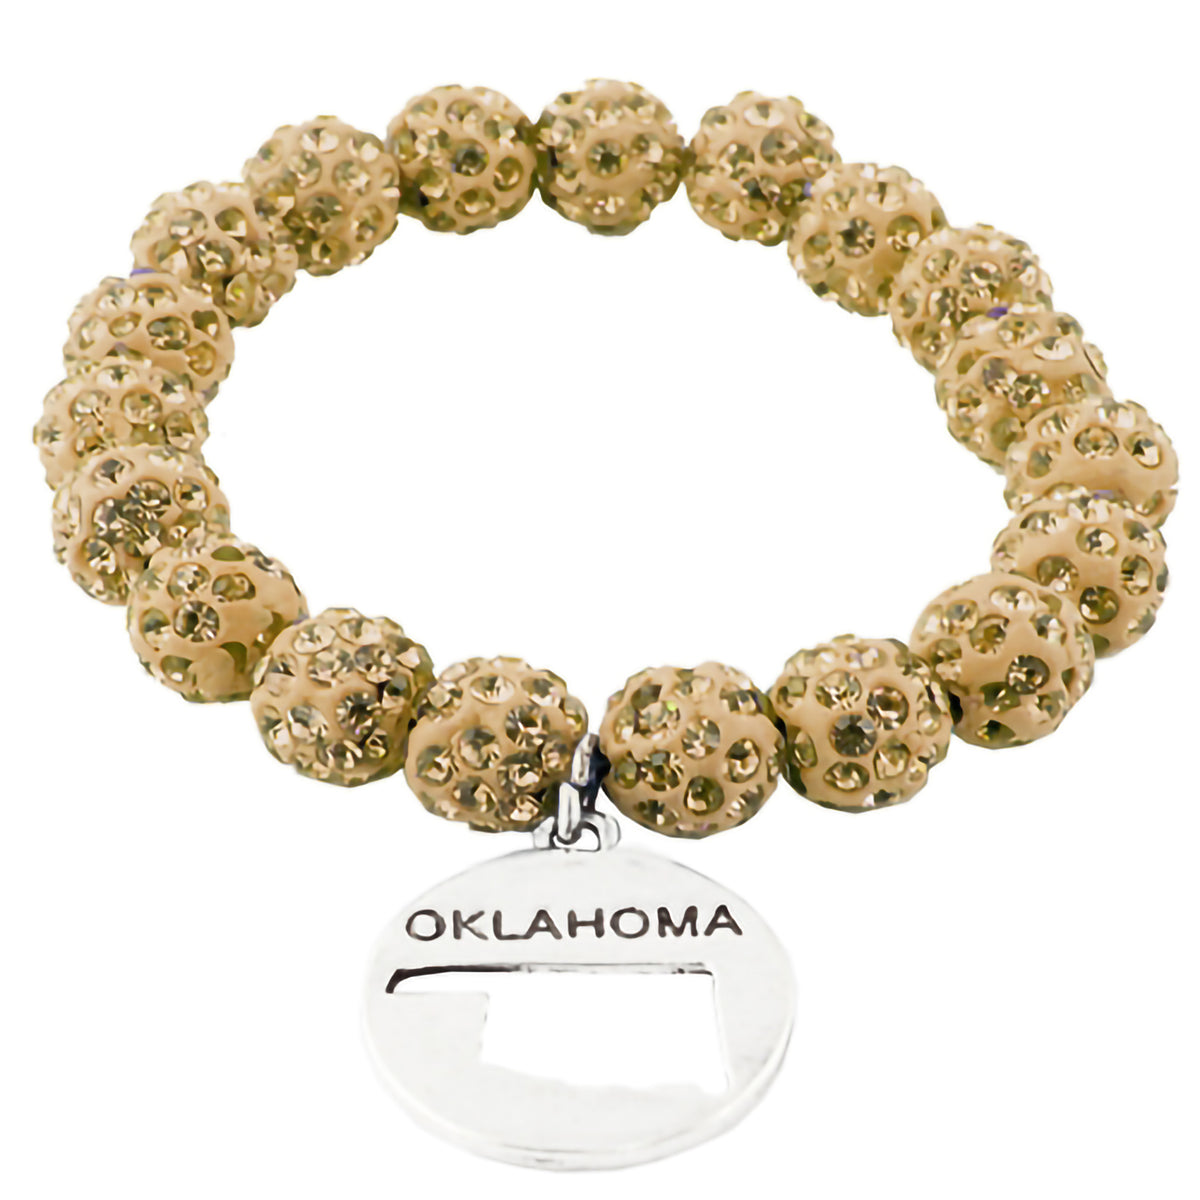 74350 - Crystal Stretch Bracelet with Oklahoma State Shape - Gold - Fashion Jewelry Wholesale